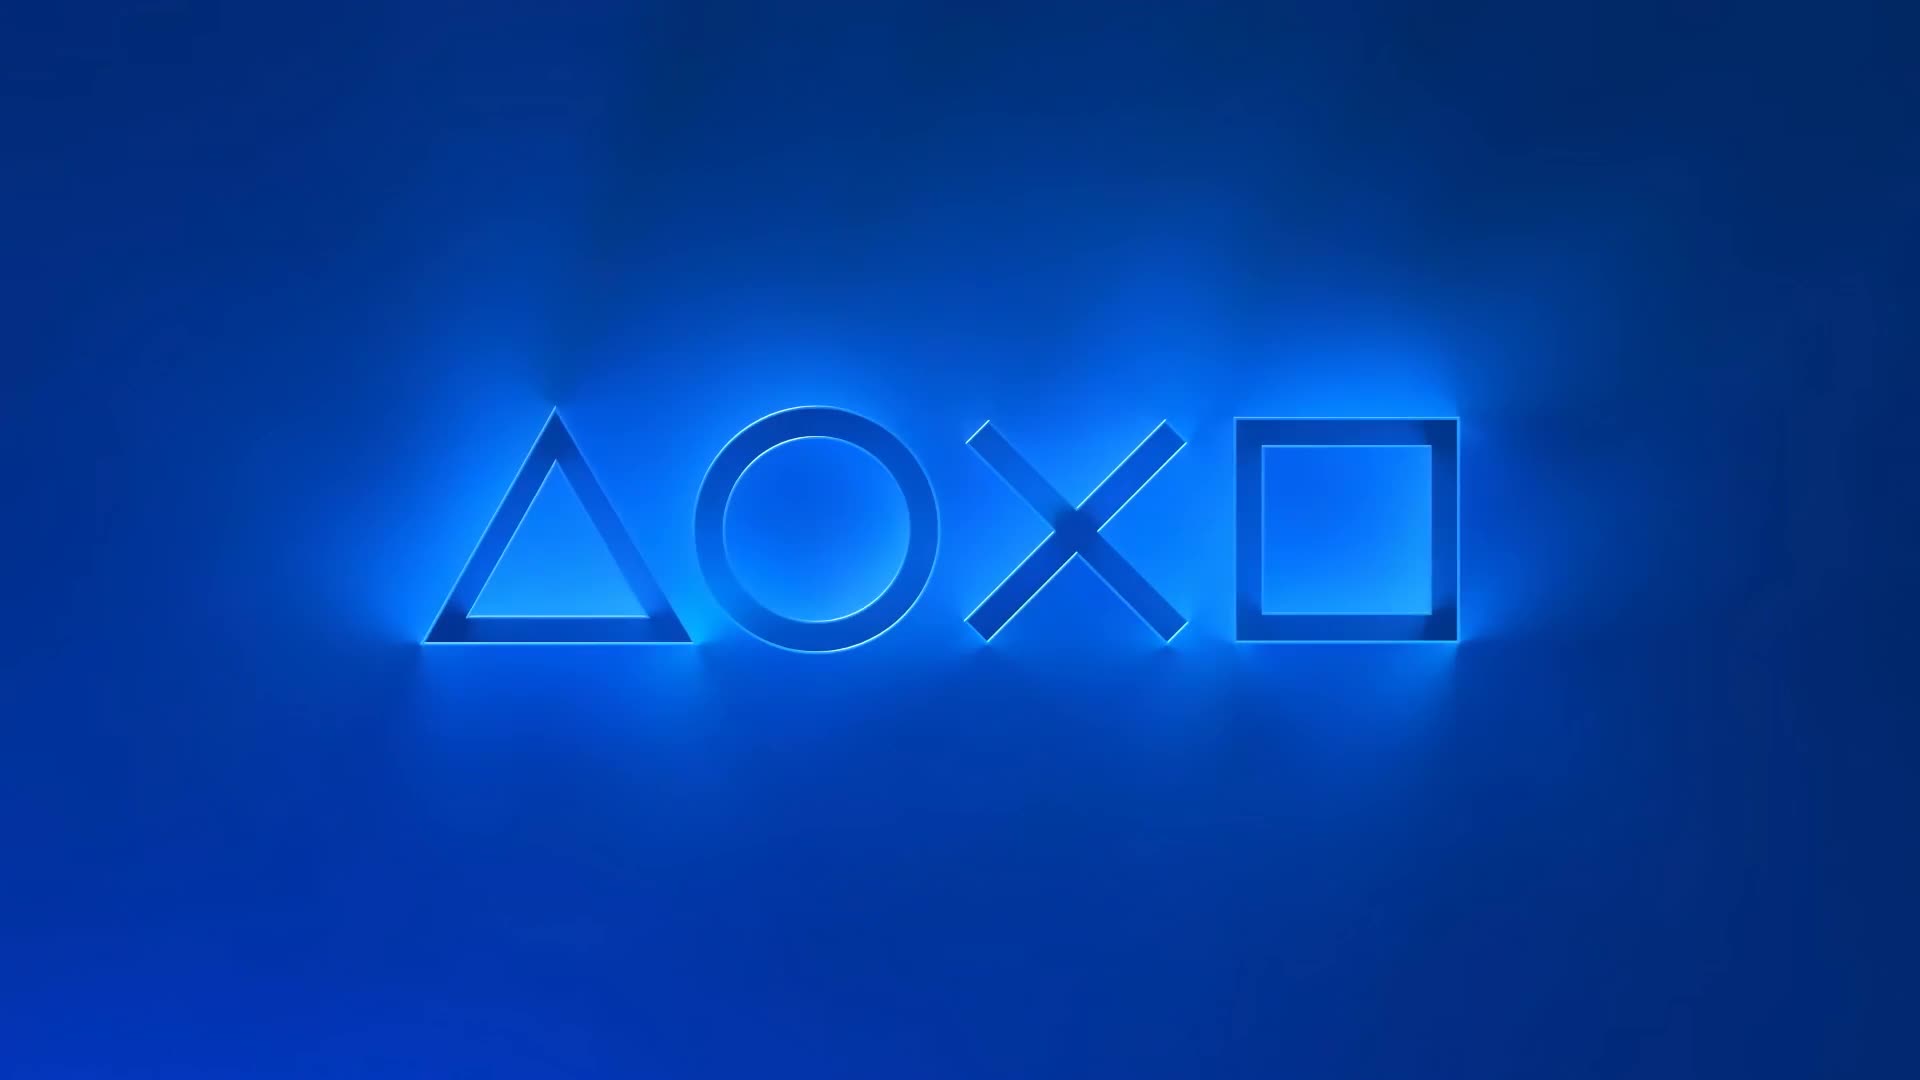 PS 5 PlayStation 5 Game Console Logo 4K quality Download Desktop Wallpaper